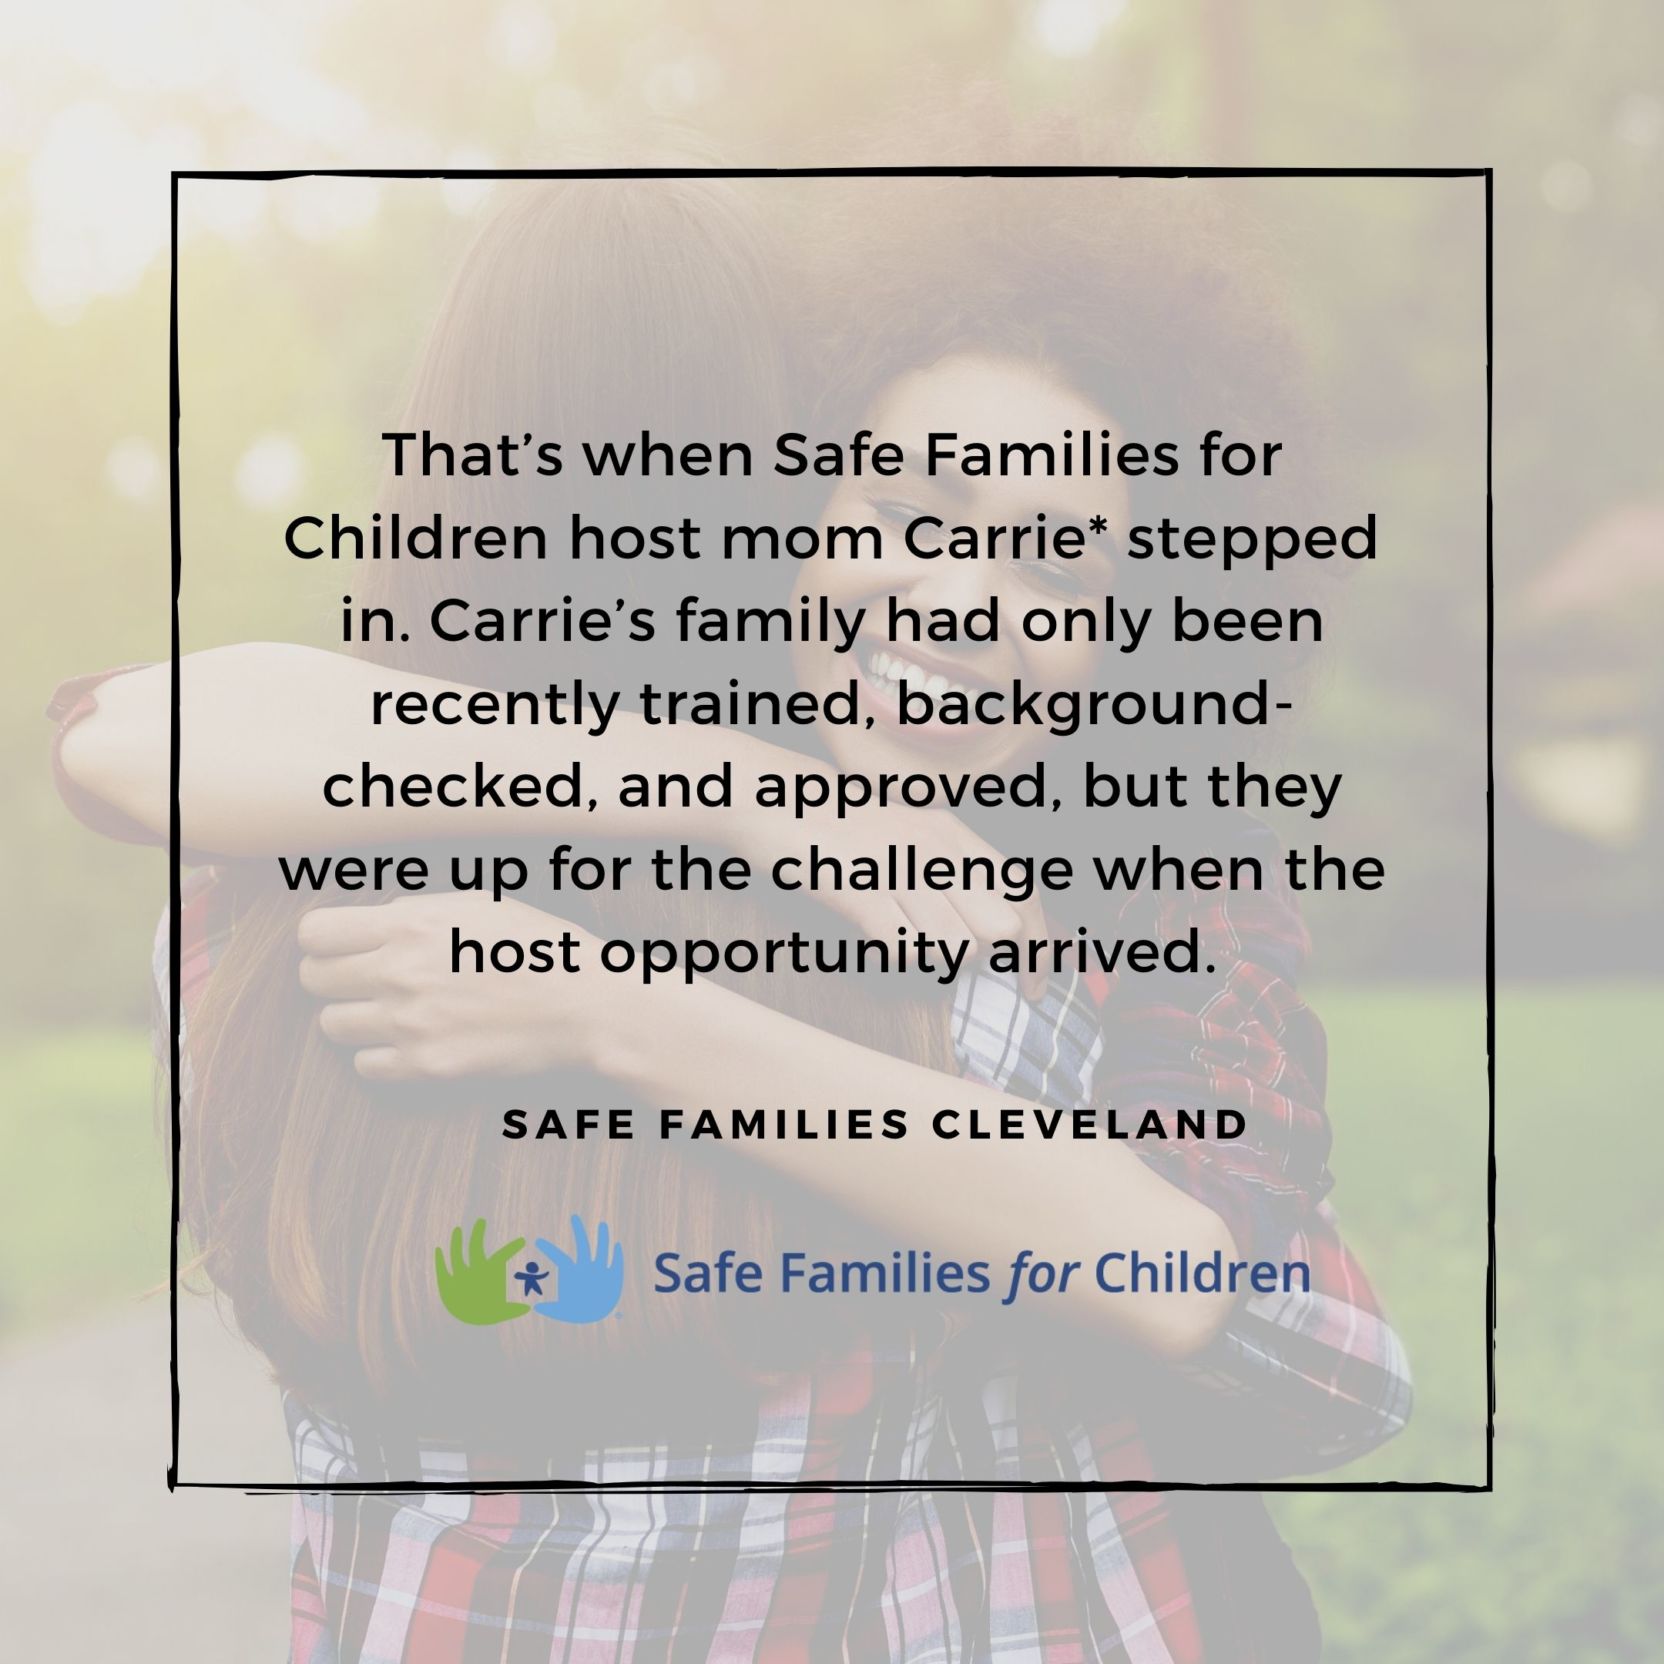 Safe Families Cleveland